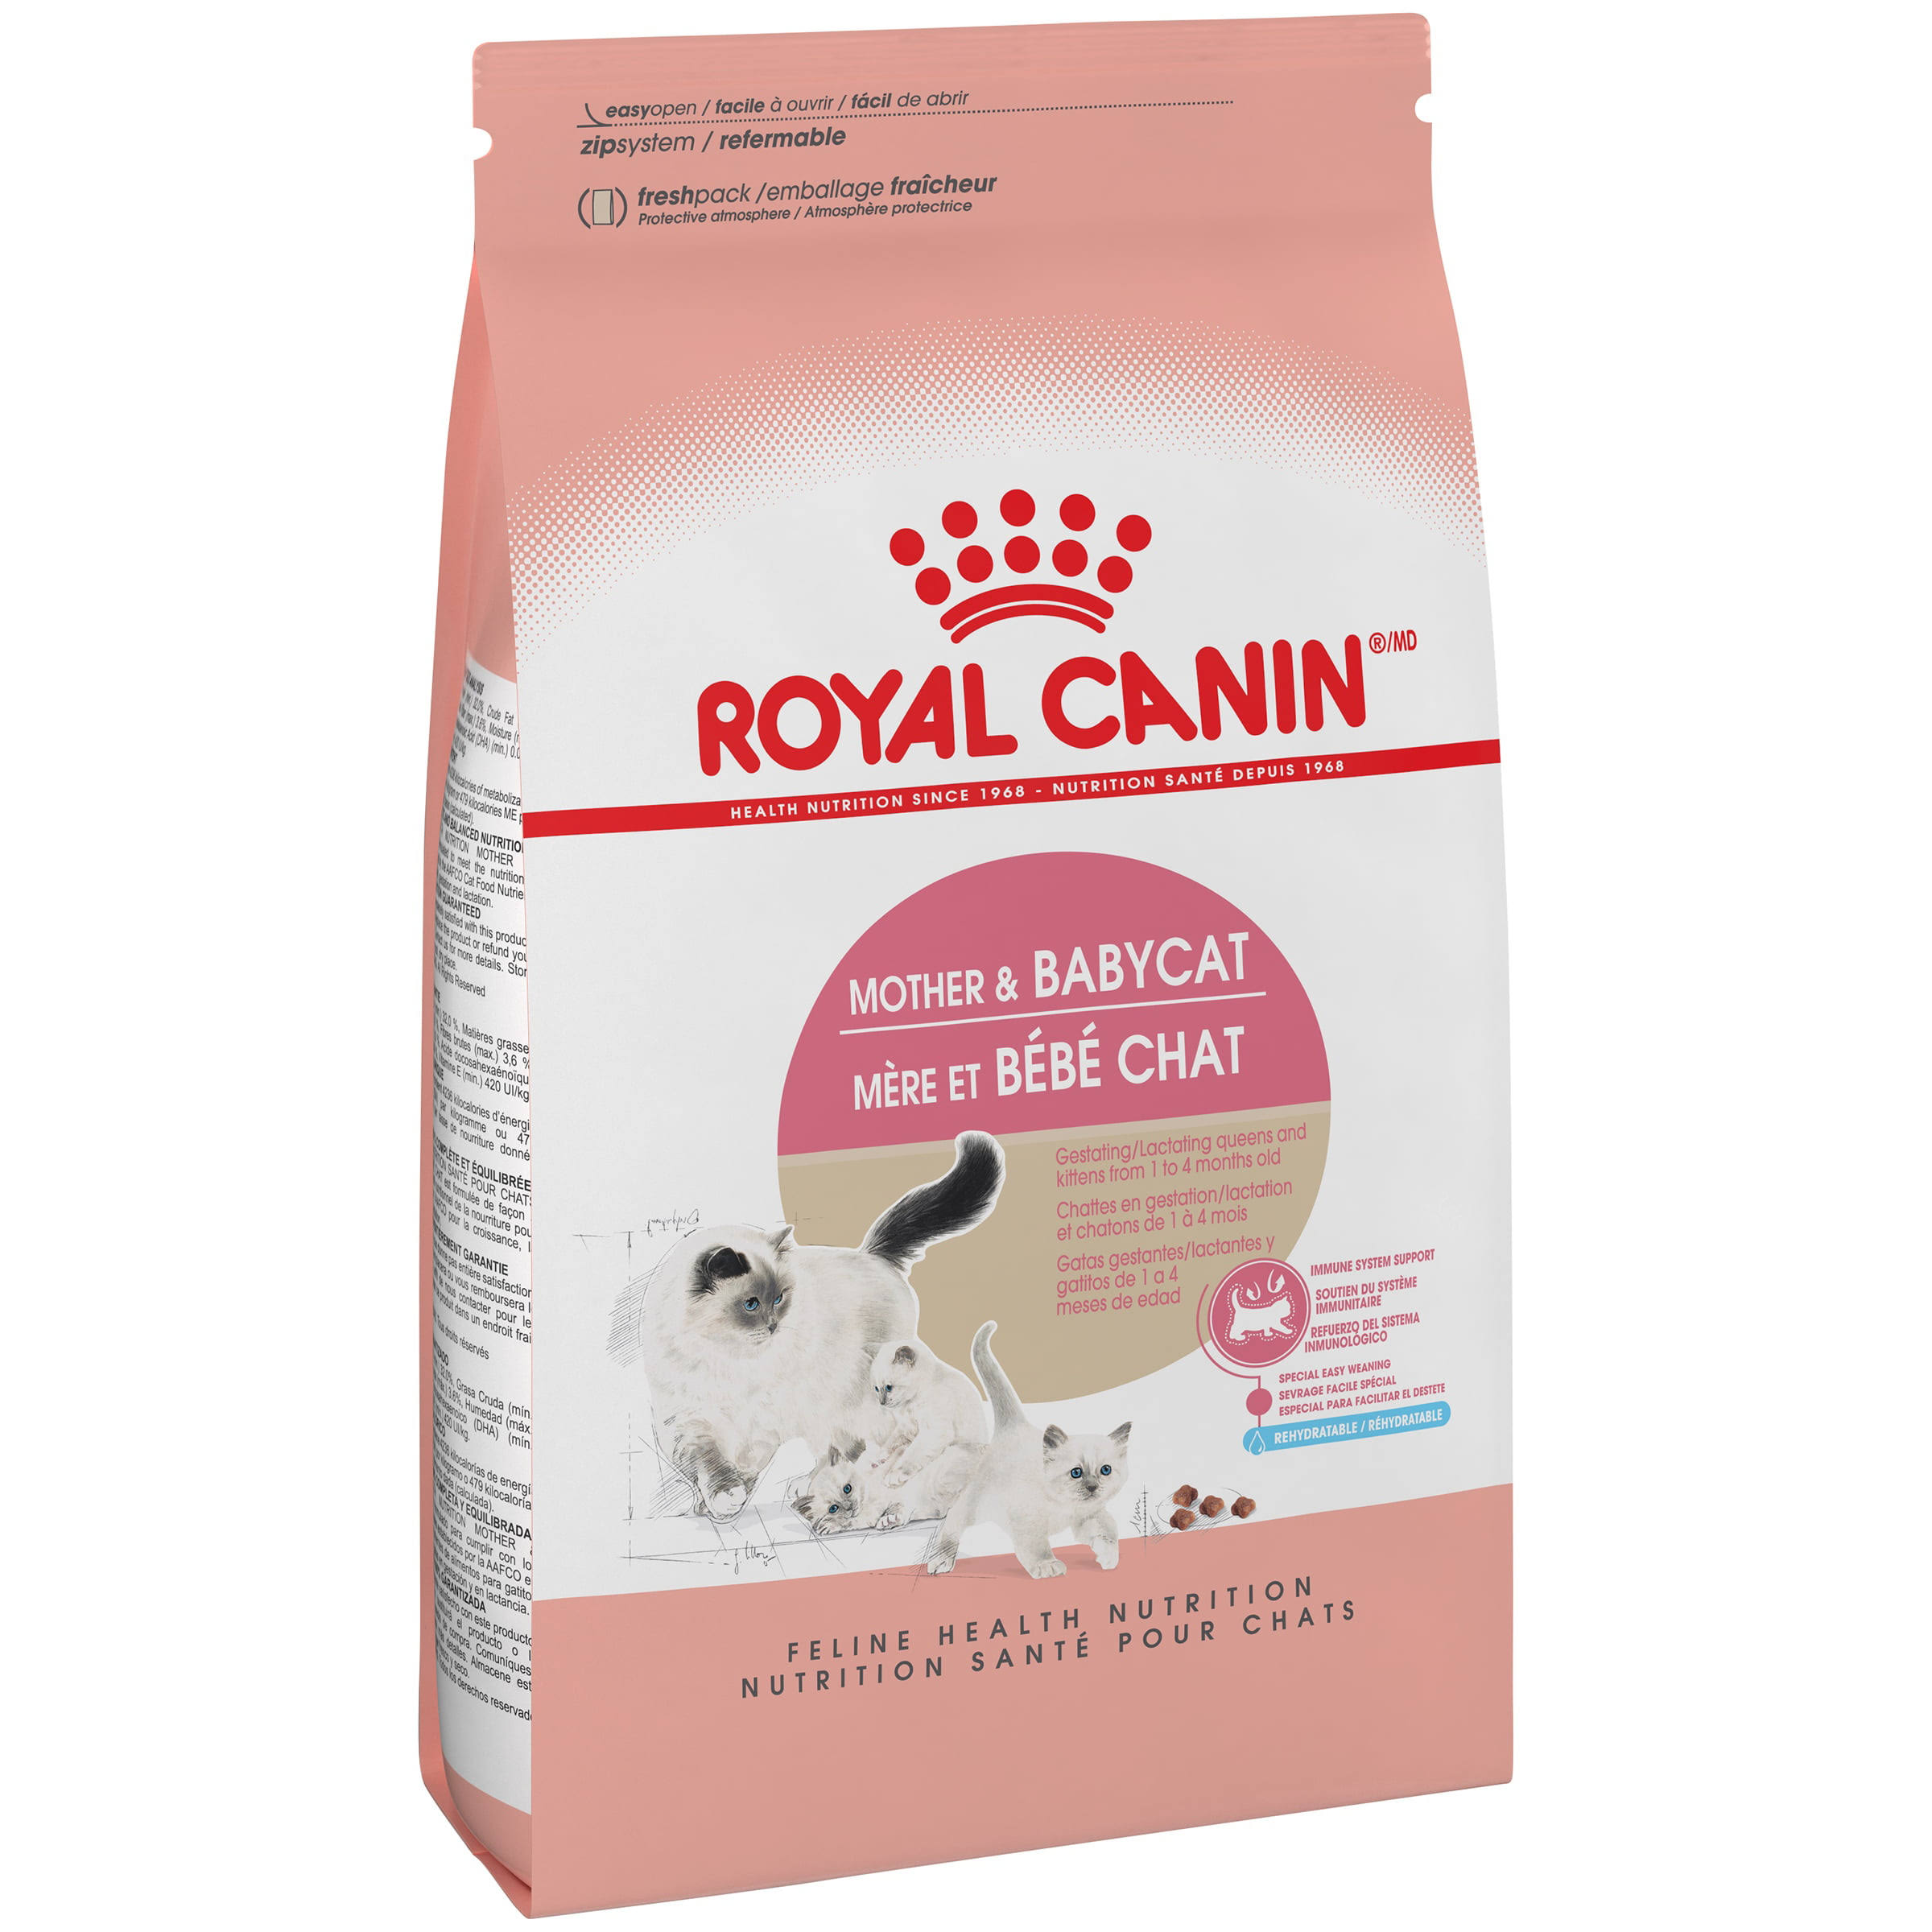 Royal Canin 7 lb Feline Health Nutrition Mother & Babycat Dry Cat Food